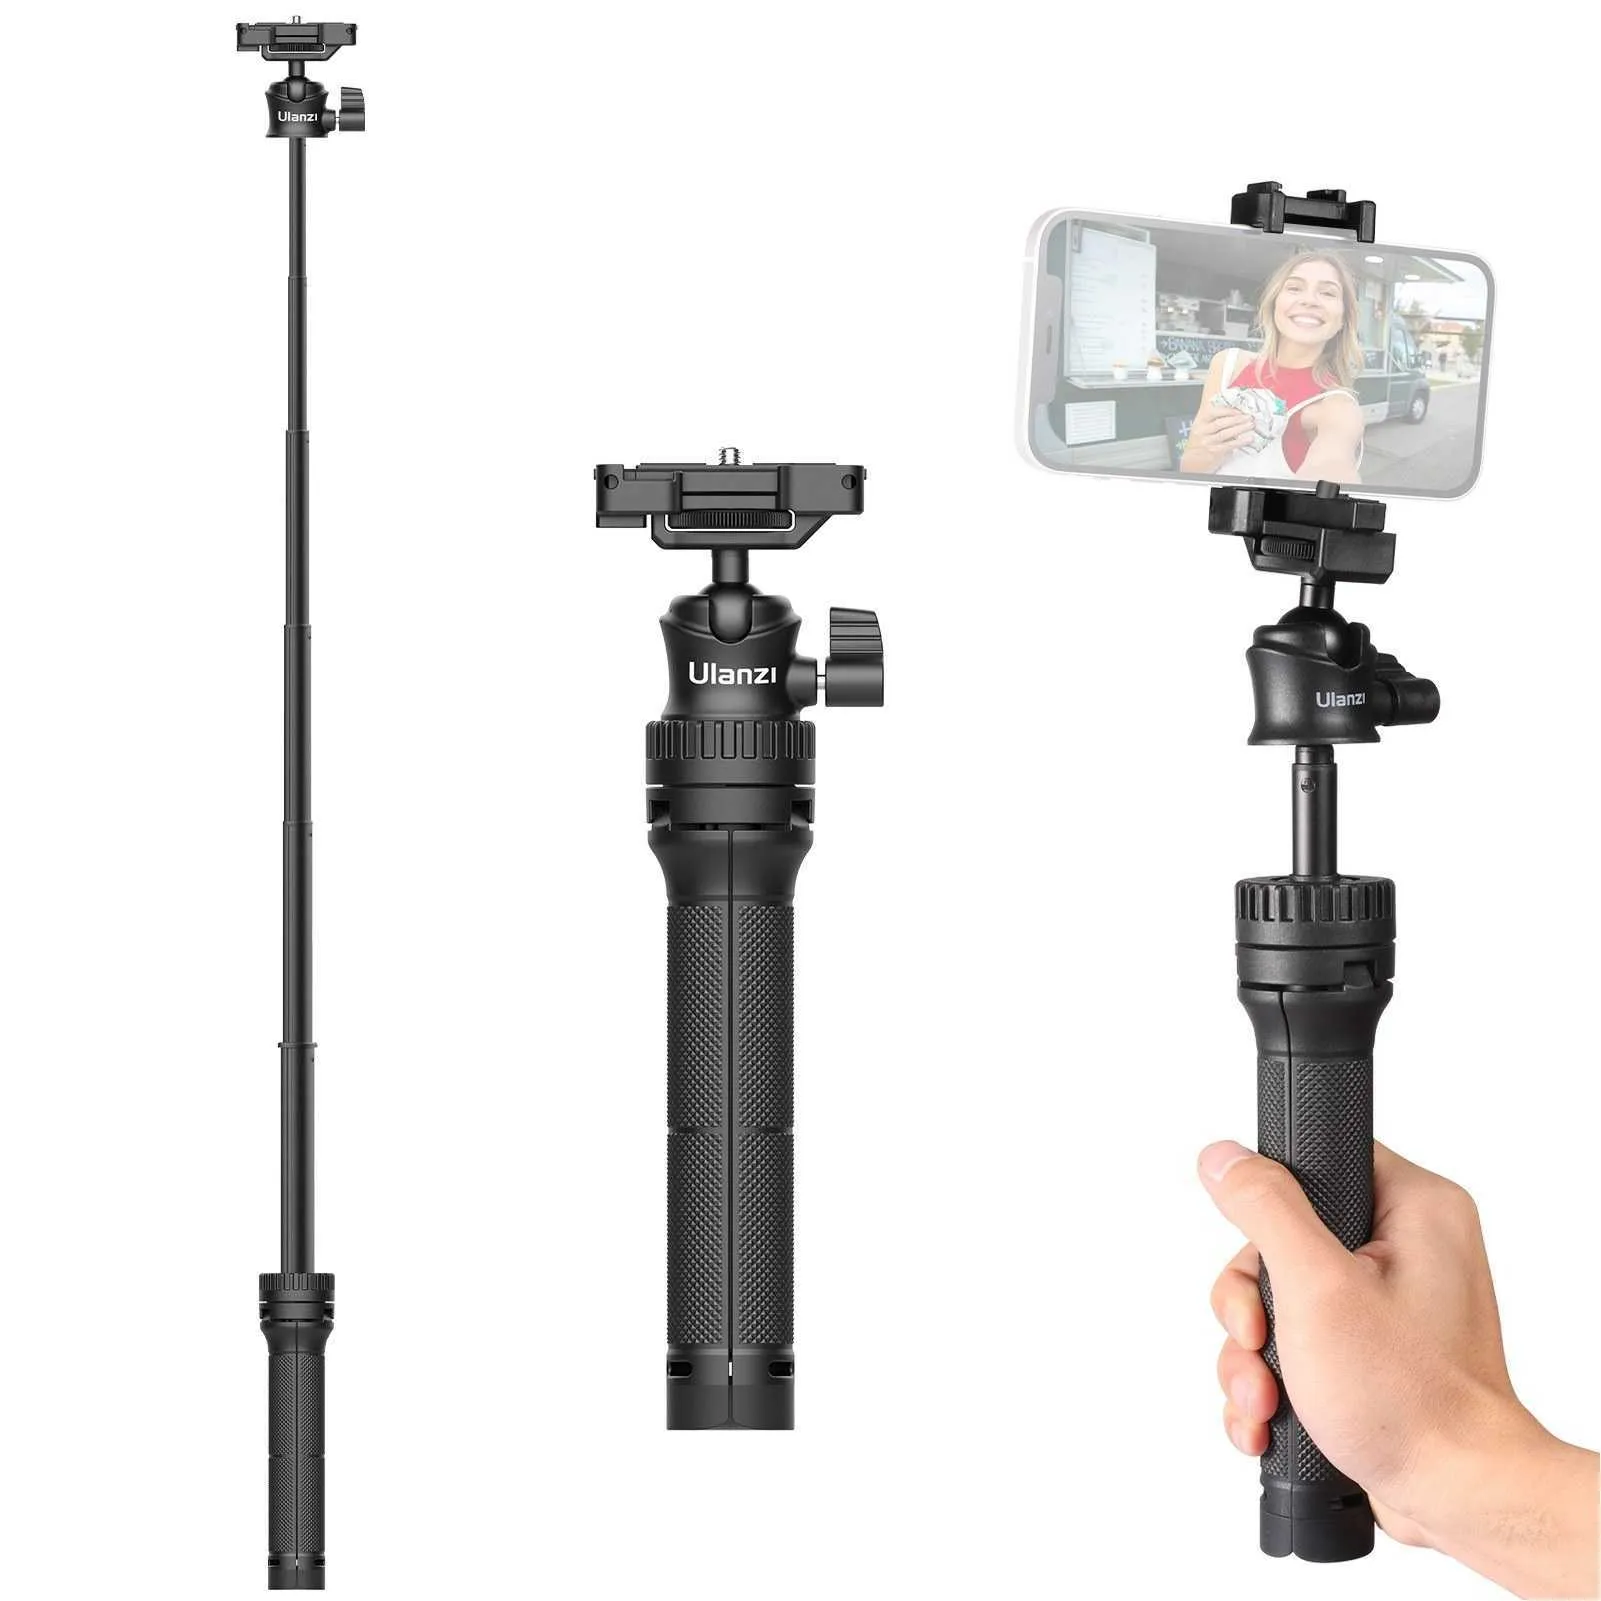 Assorgente Selfie Stick Treppiede Palmare Palmare Bracket Desktop Treppiede Stand 360 ° Adattatore a sfera girevole a 360 ° per smartphone Camera LED Video Light Stand